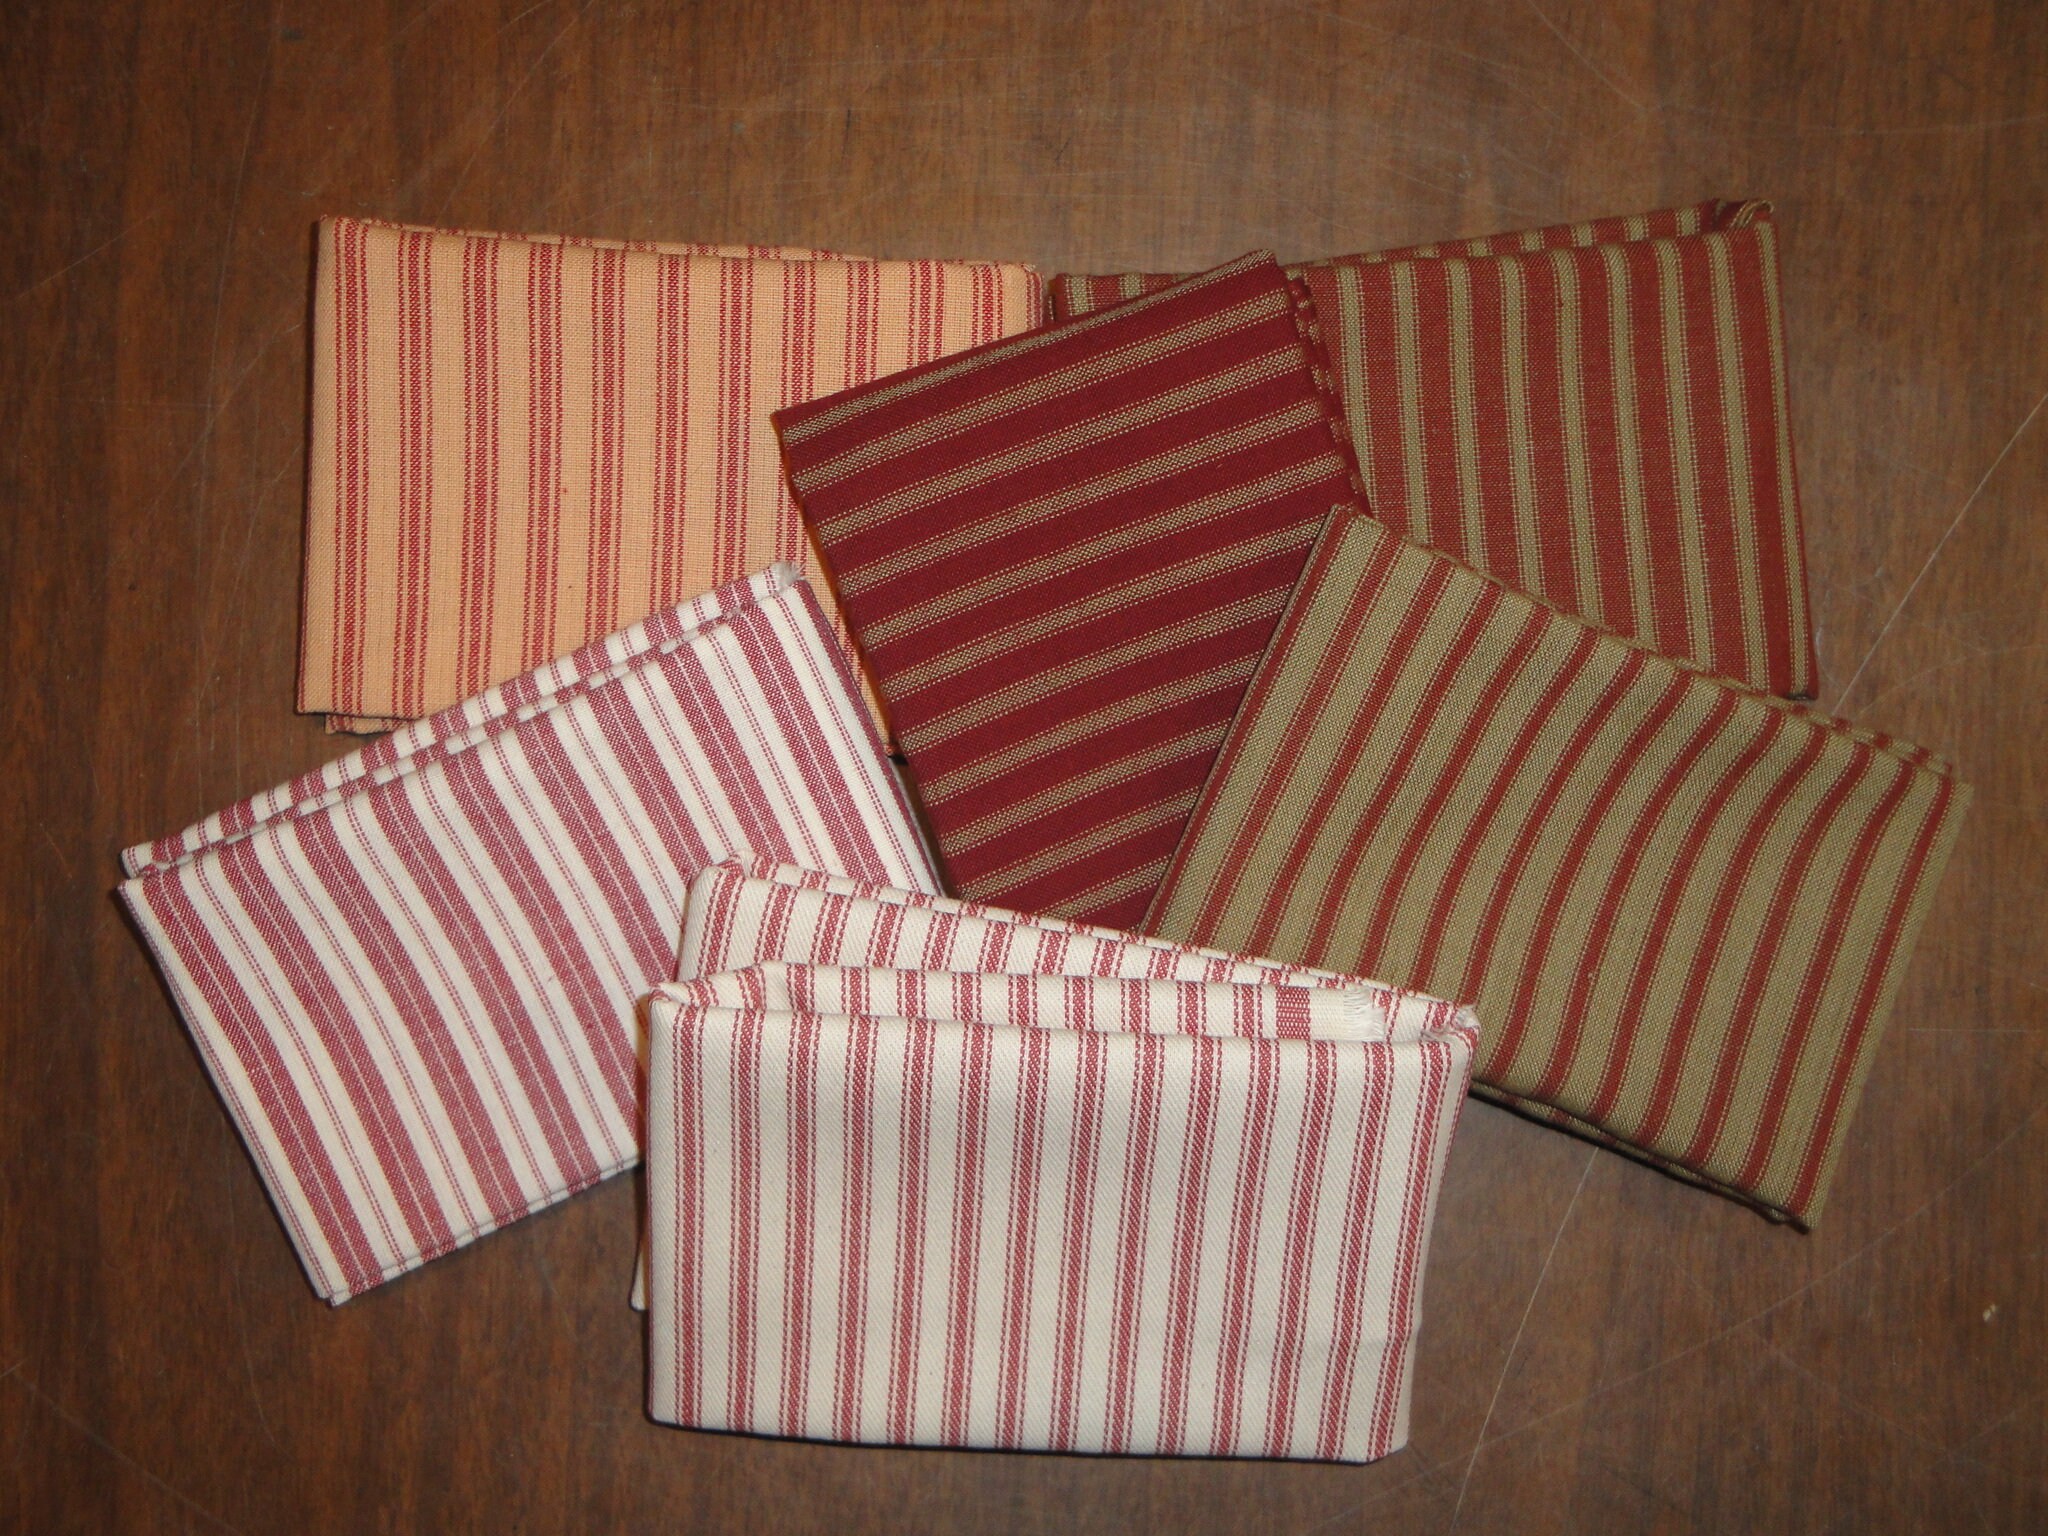 Red Stripe Homespun Ticking Fabric Sold By The yard - Kittredge Mercantile